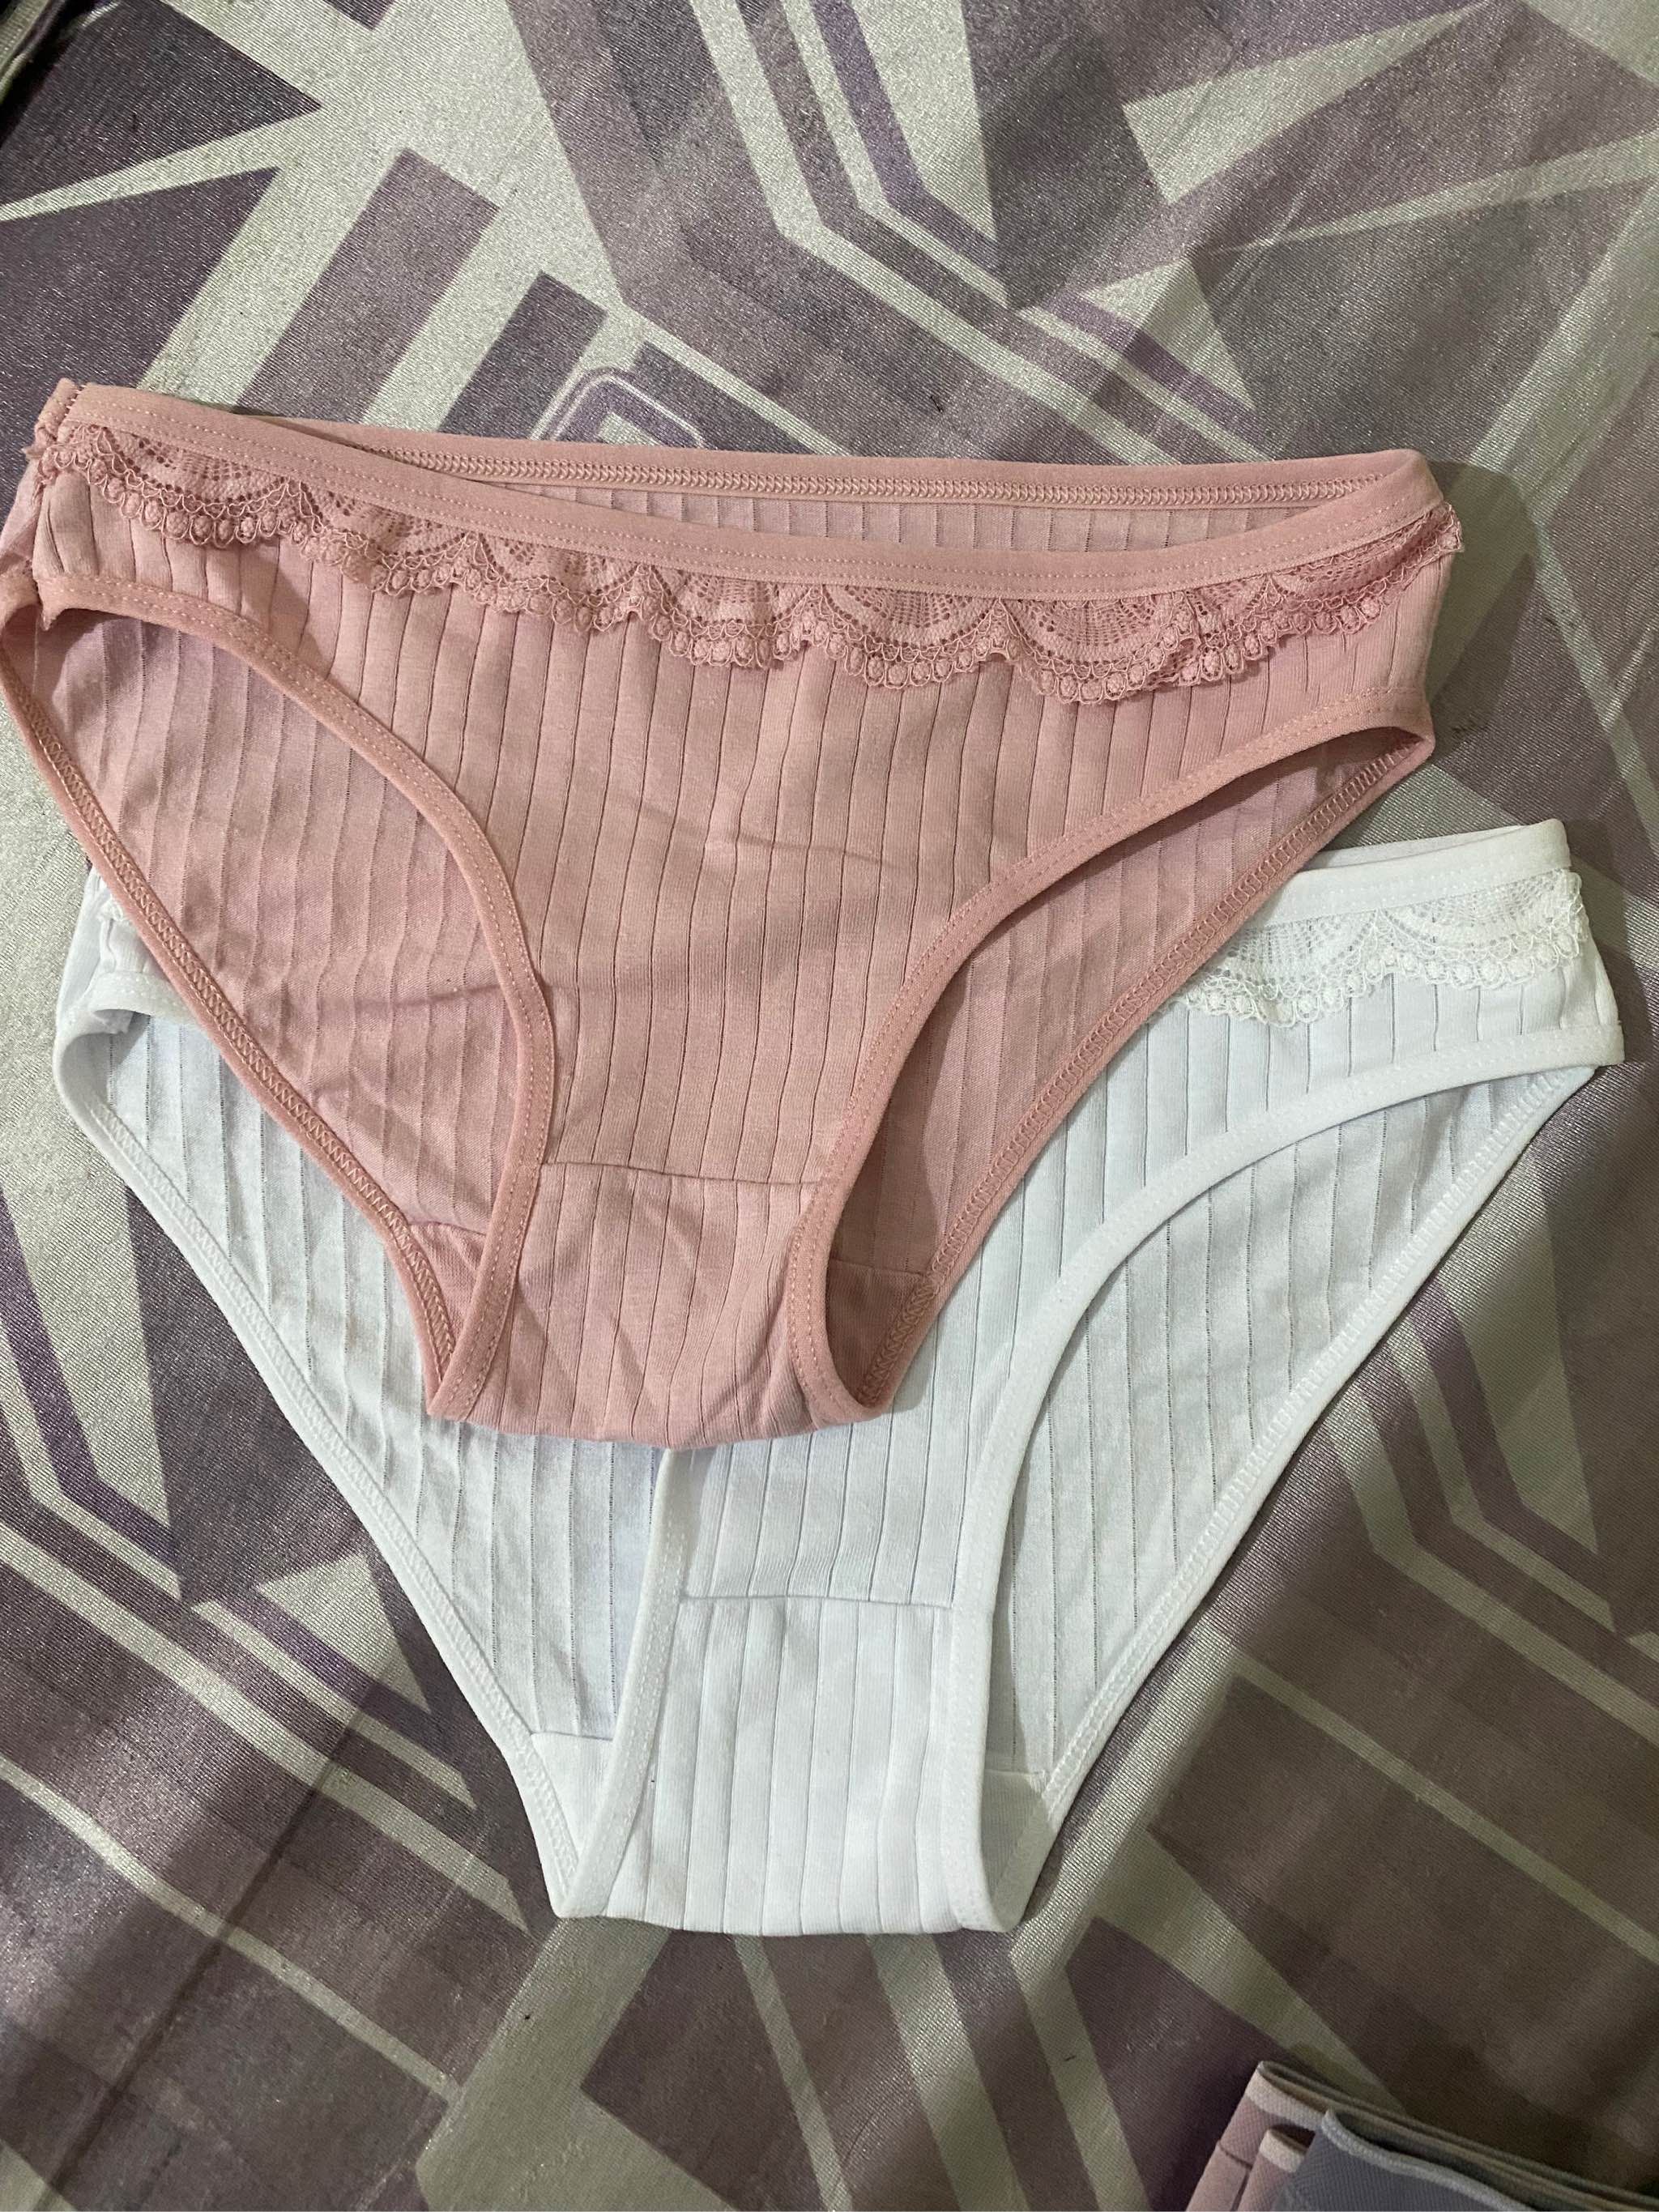 SMY Pack of 2 - Lace Waist Ladies Panties Stripe Cotton Female